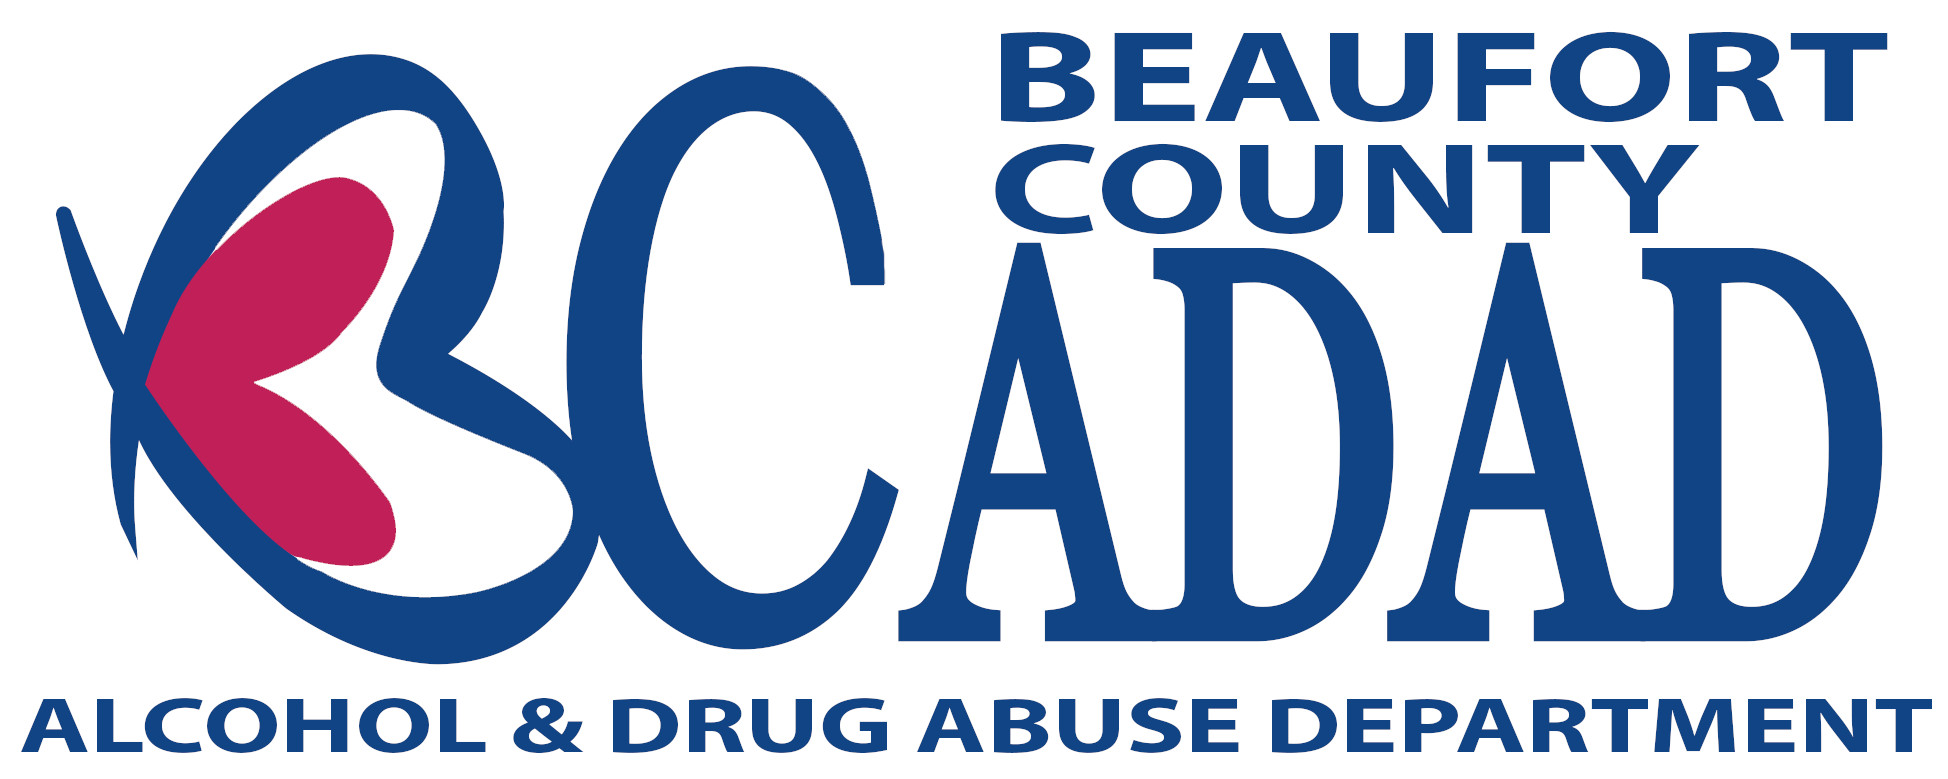 Beaufort County Alcohol and Drug Abuse Board Seeking Volunteers